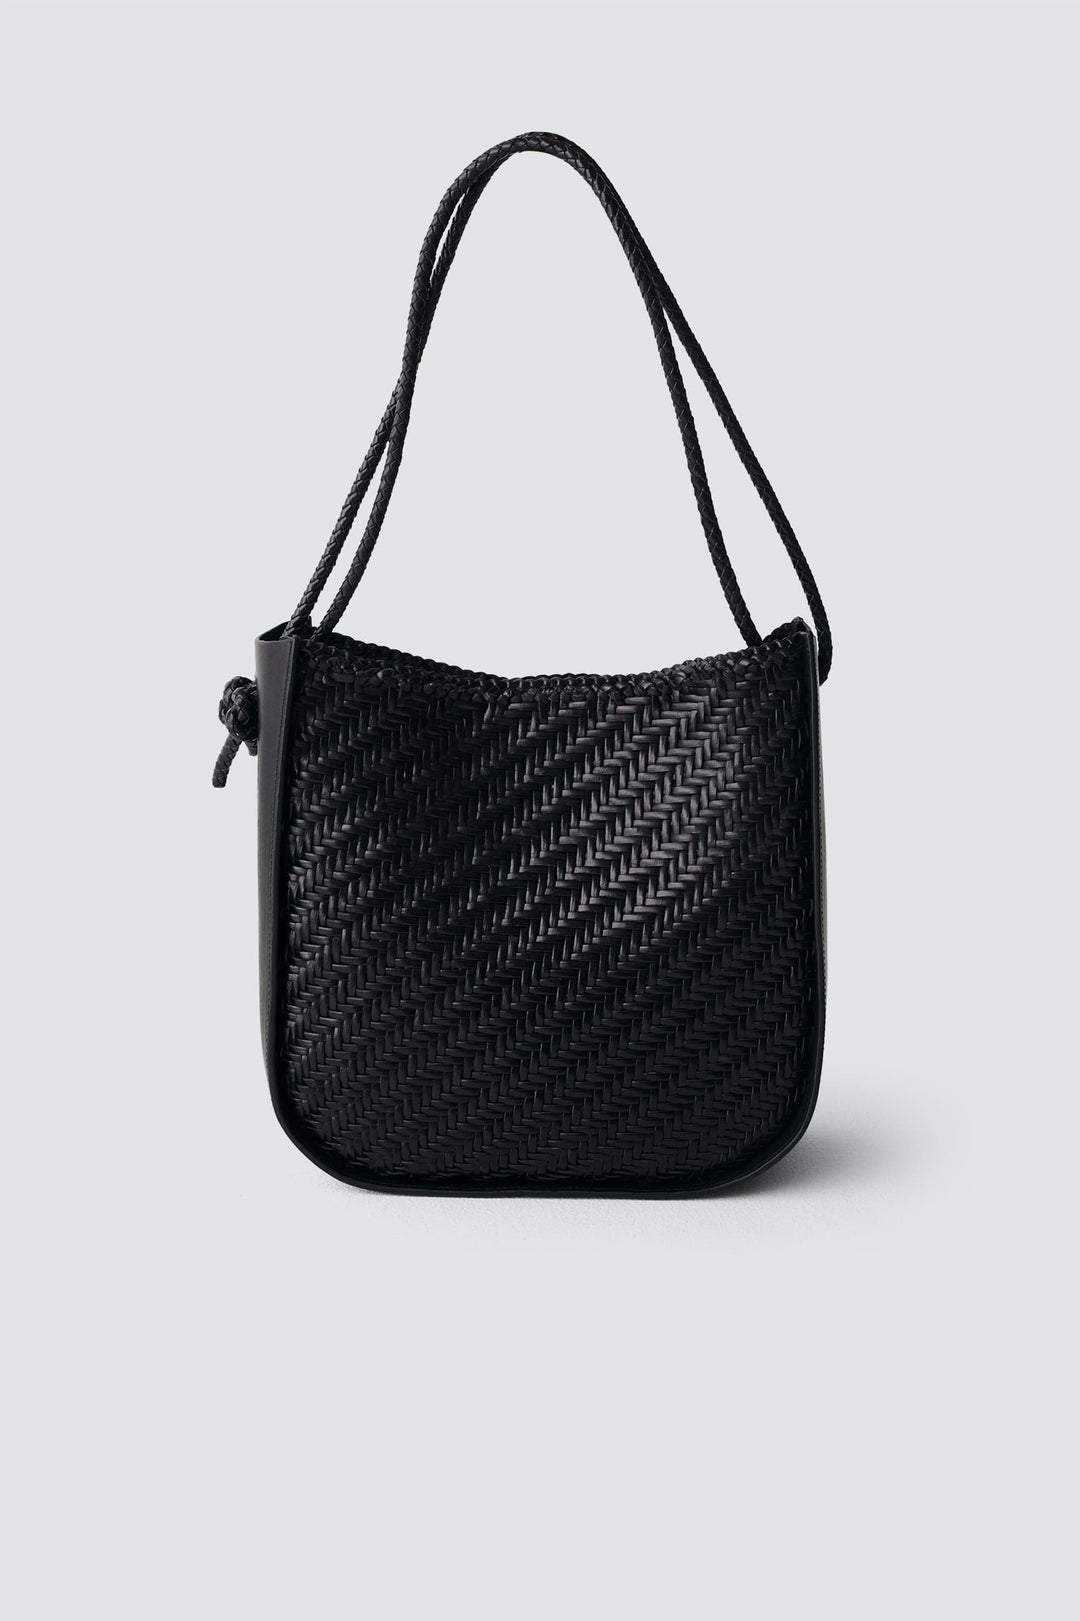 Dragon Diffusion woven leather bag handmade - Wanaka Black